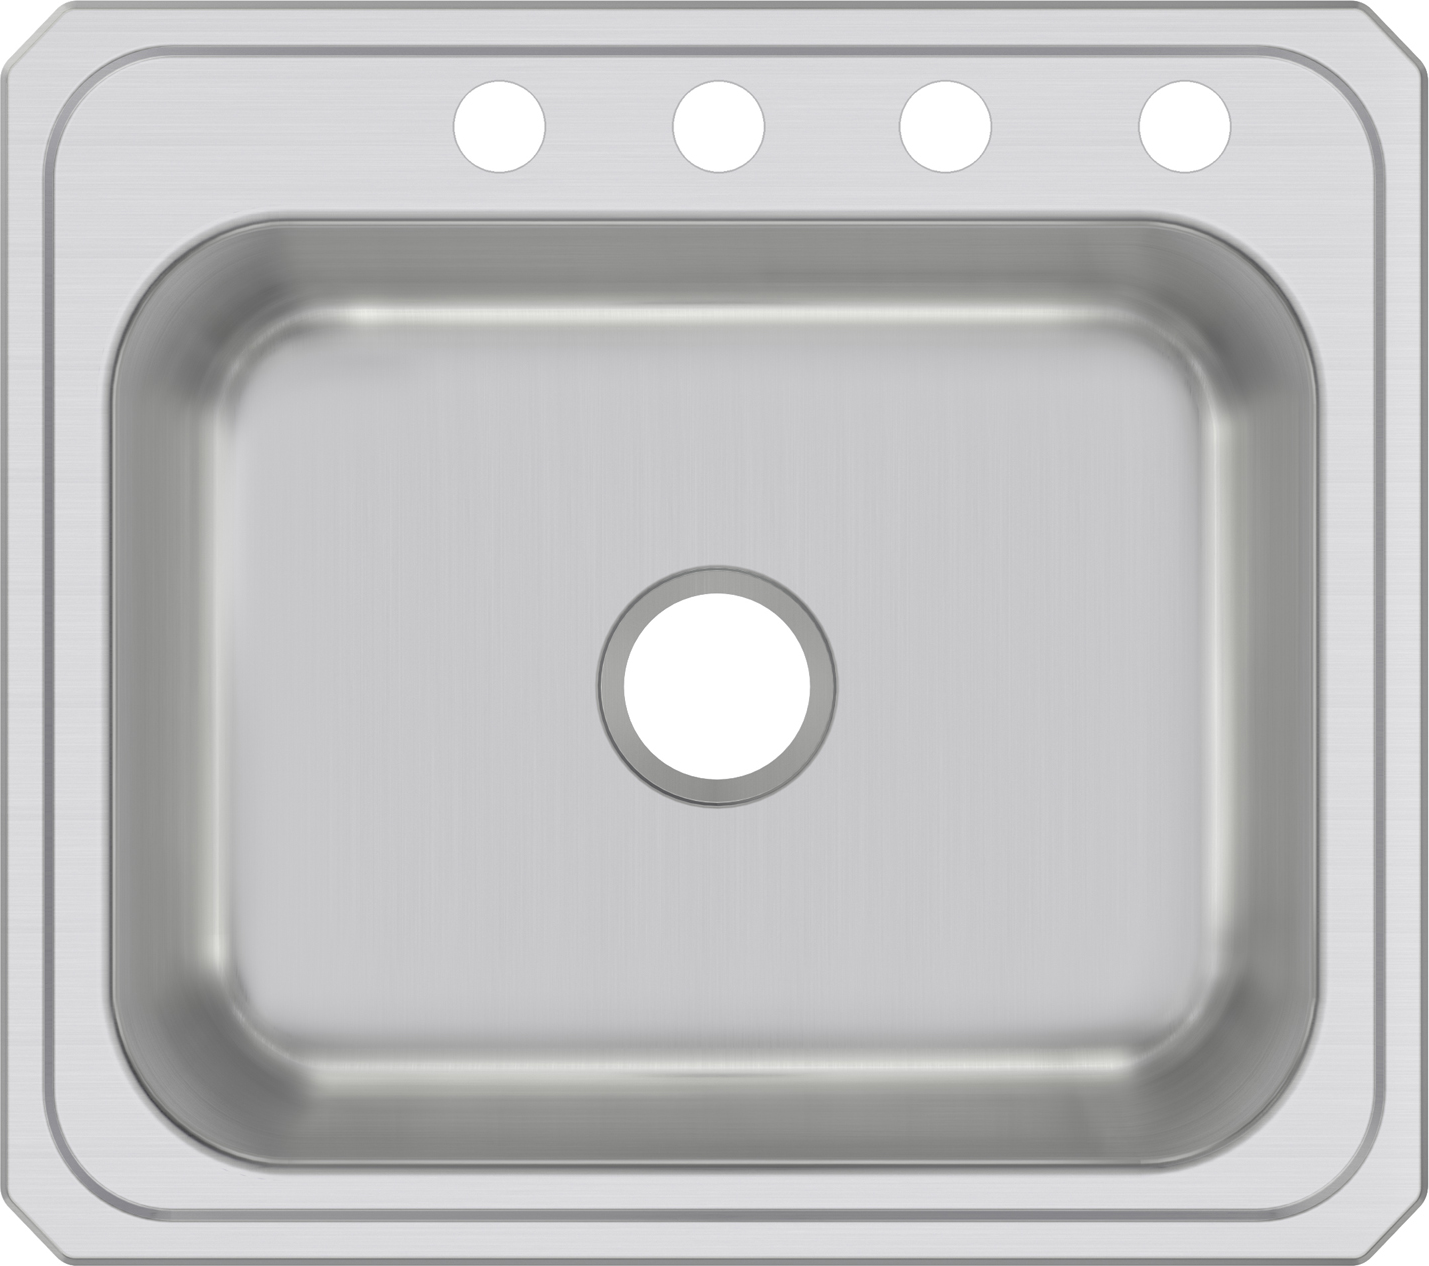 Elkay CR25224 - Elkay Celebrity Stainless Steel 25" x 22" x 7", Single Bowl Drop-in Sink